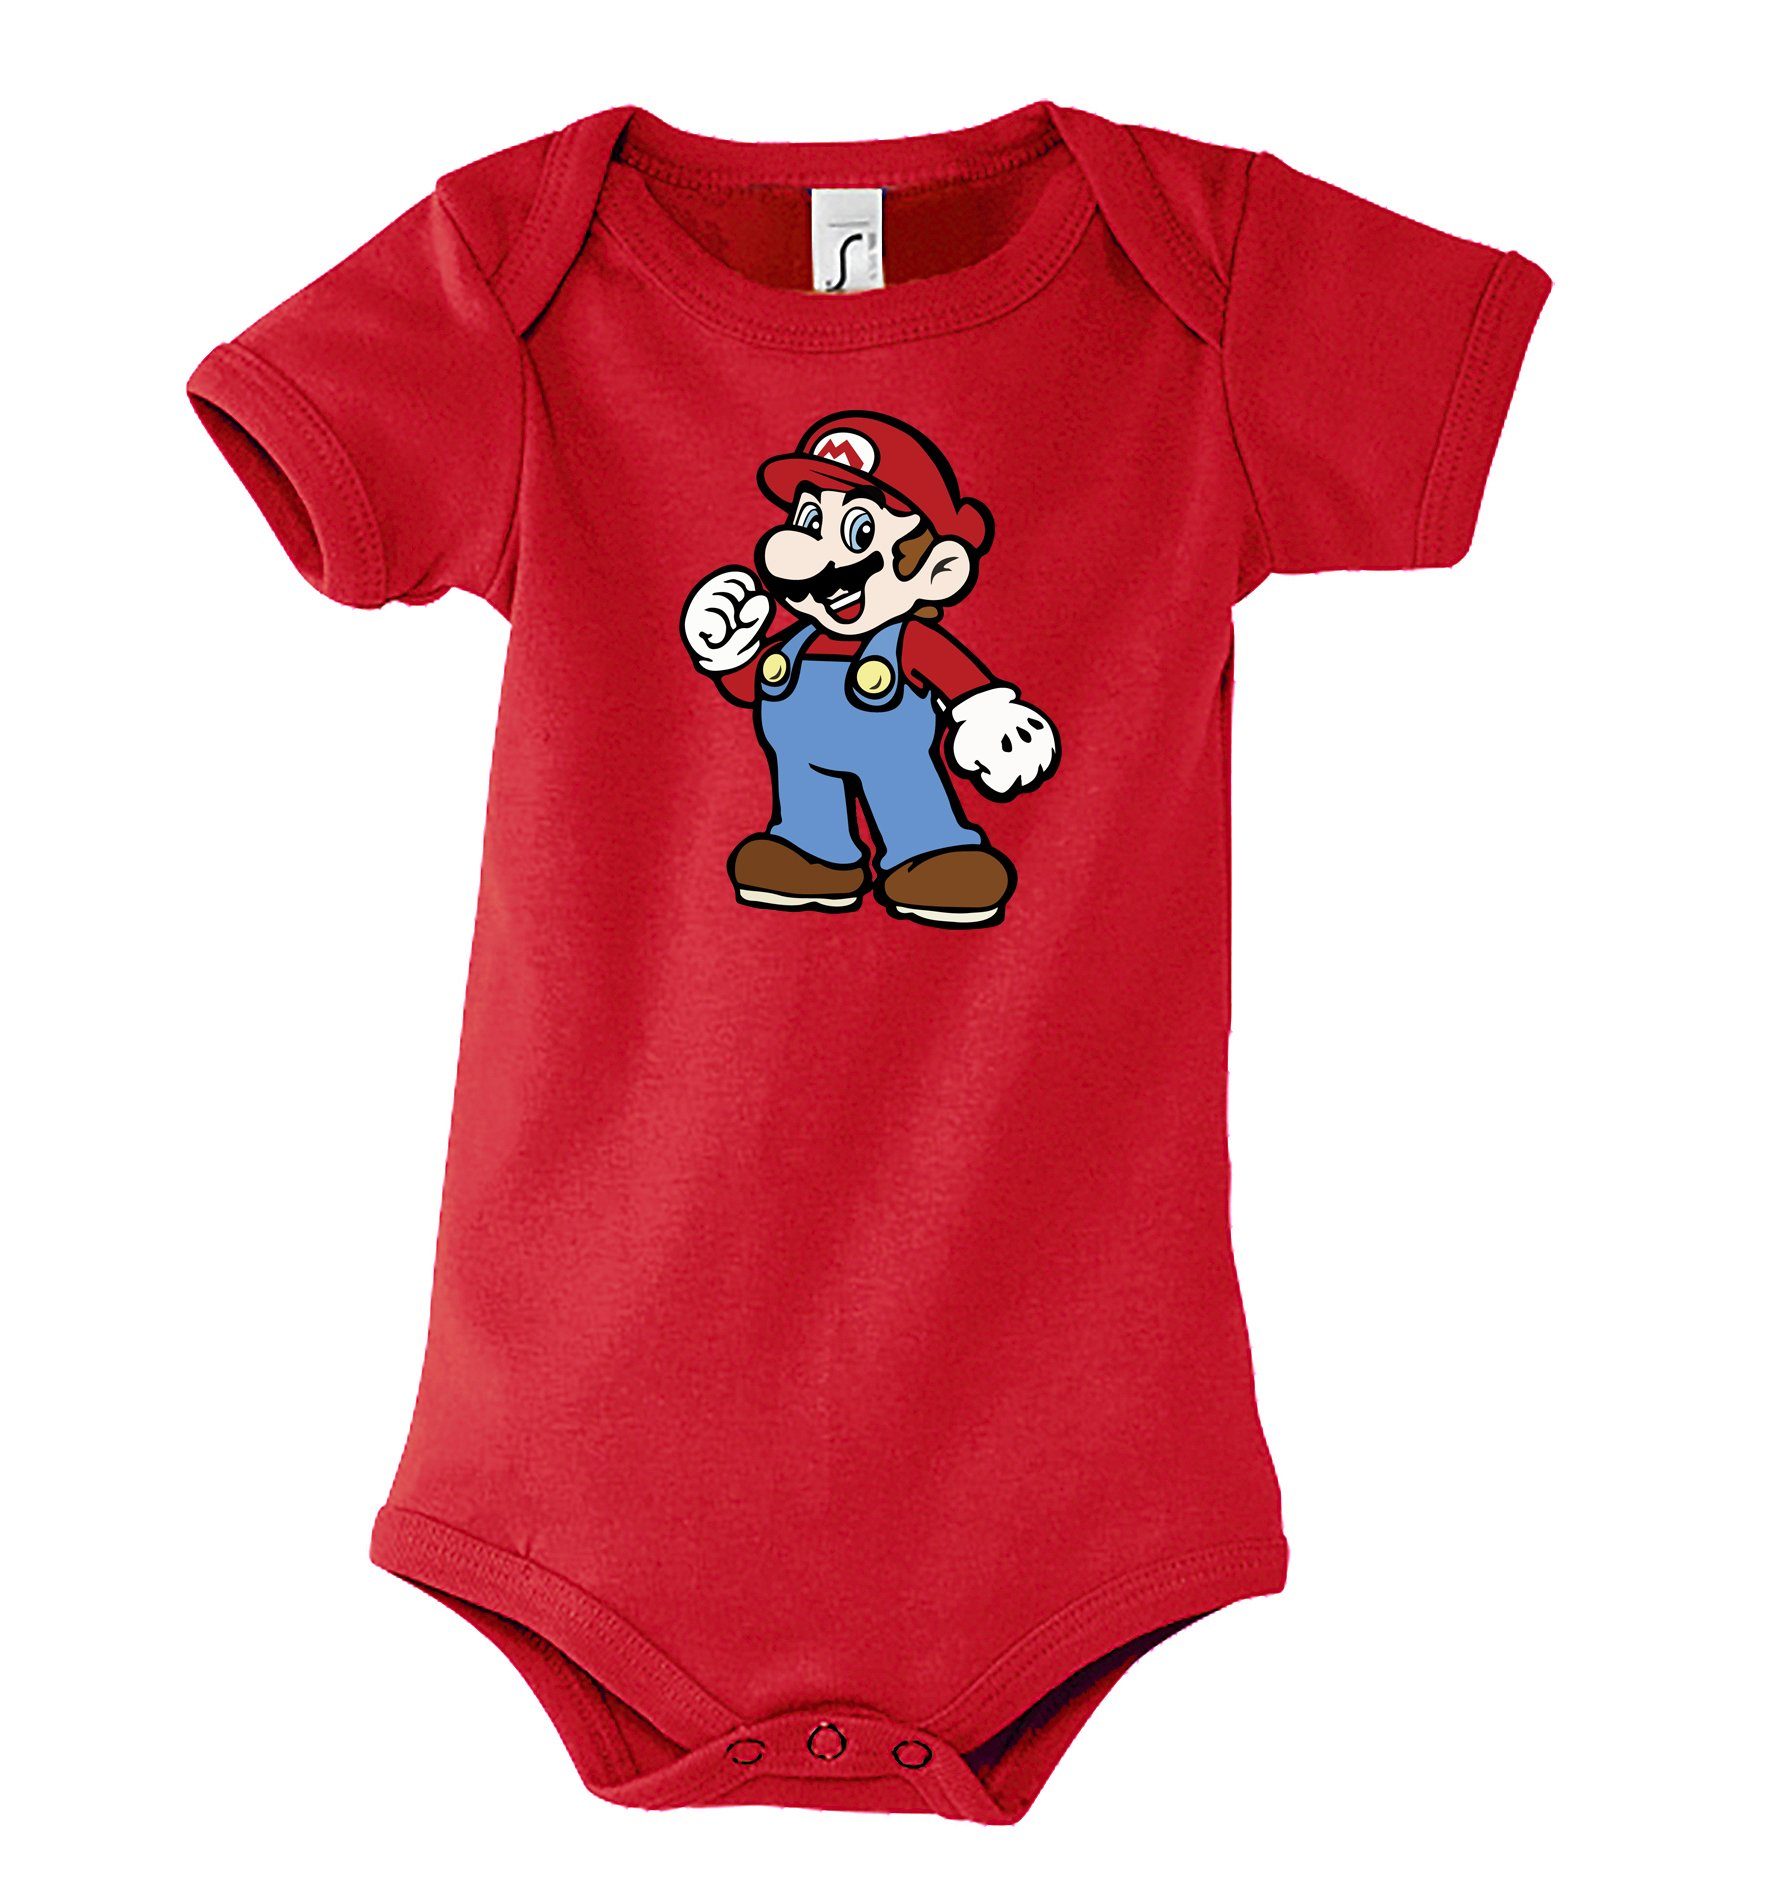 Youth Designz Kurzarmbody Baby Body Strampler Mario mit niedlichem Frontprint Rot